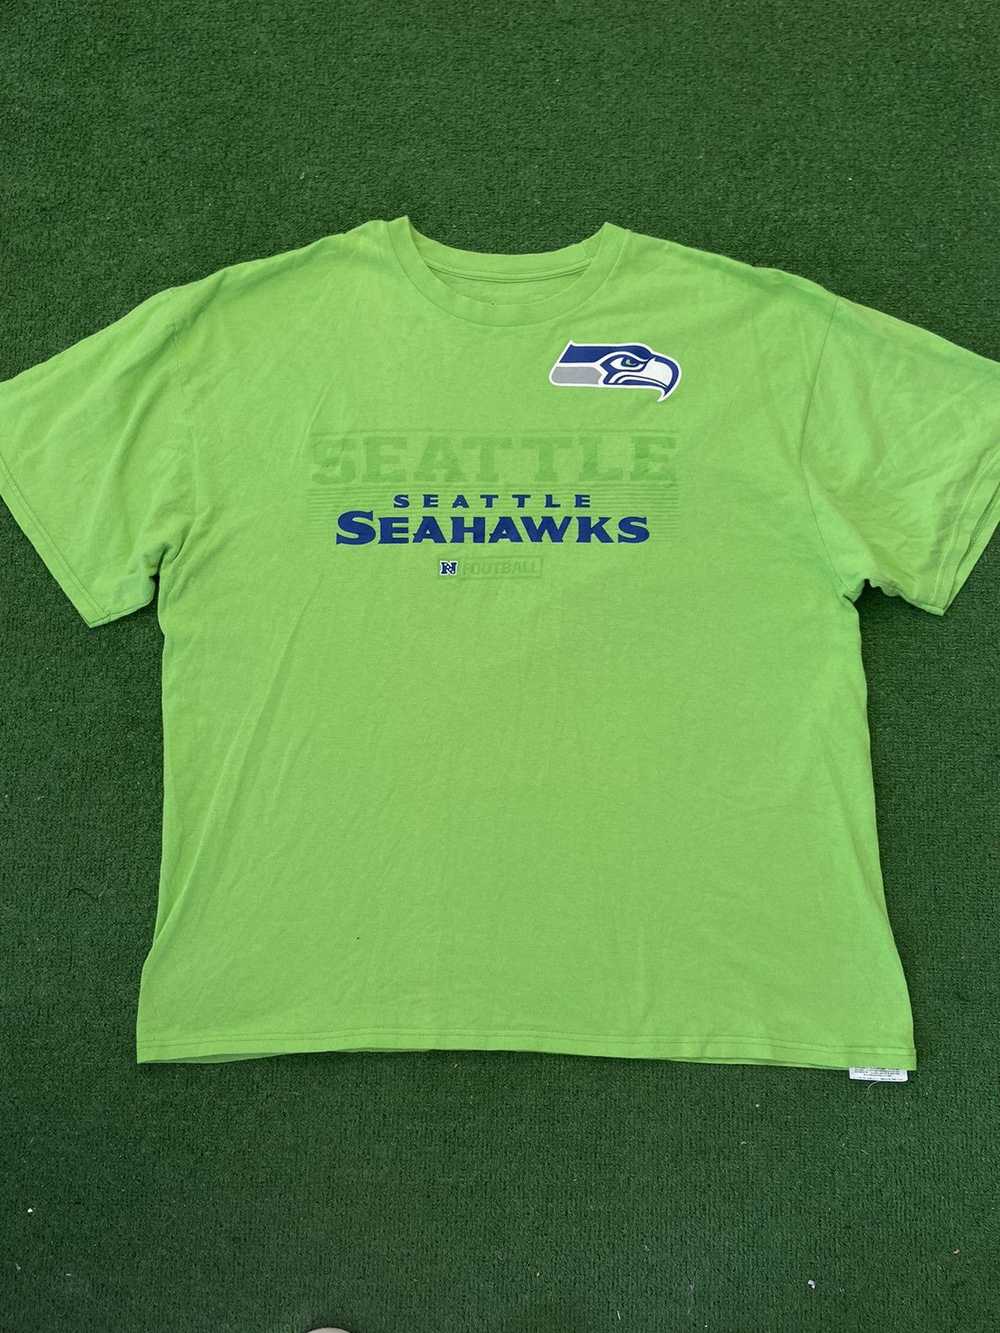 NFL Seattle seahawks tshirt Jersey nfl - image 1